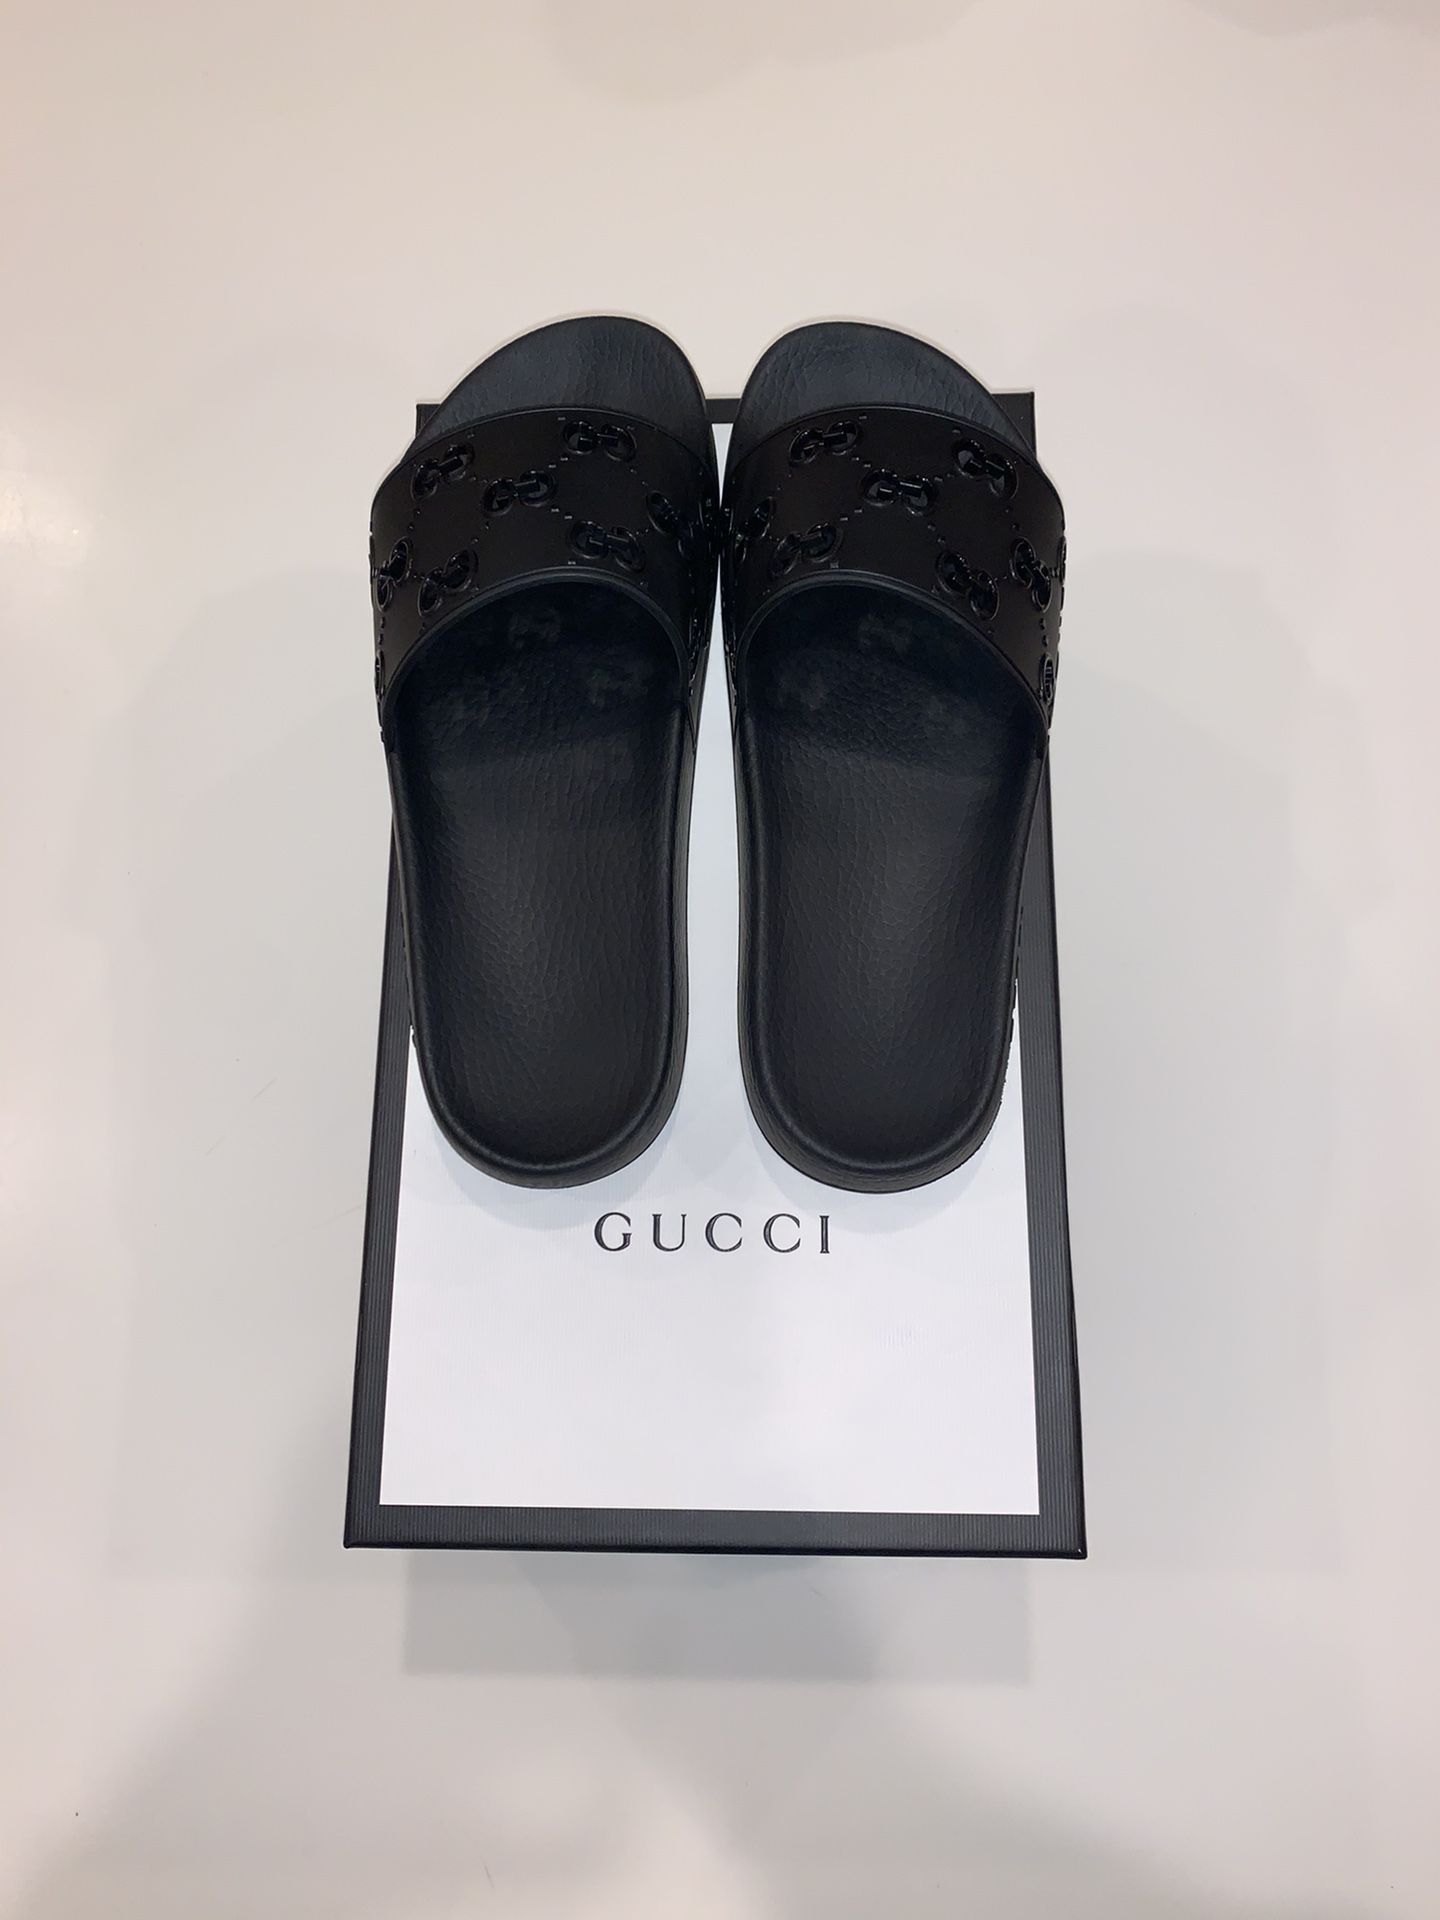 Gucci slides Size 9-11